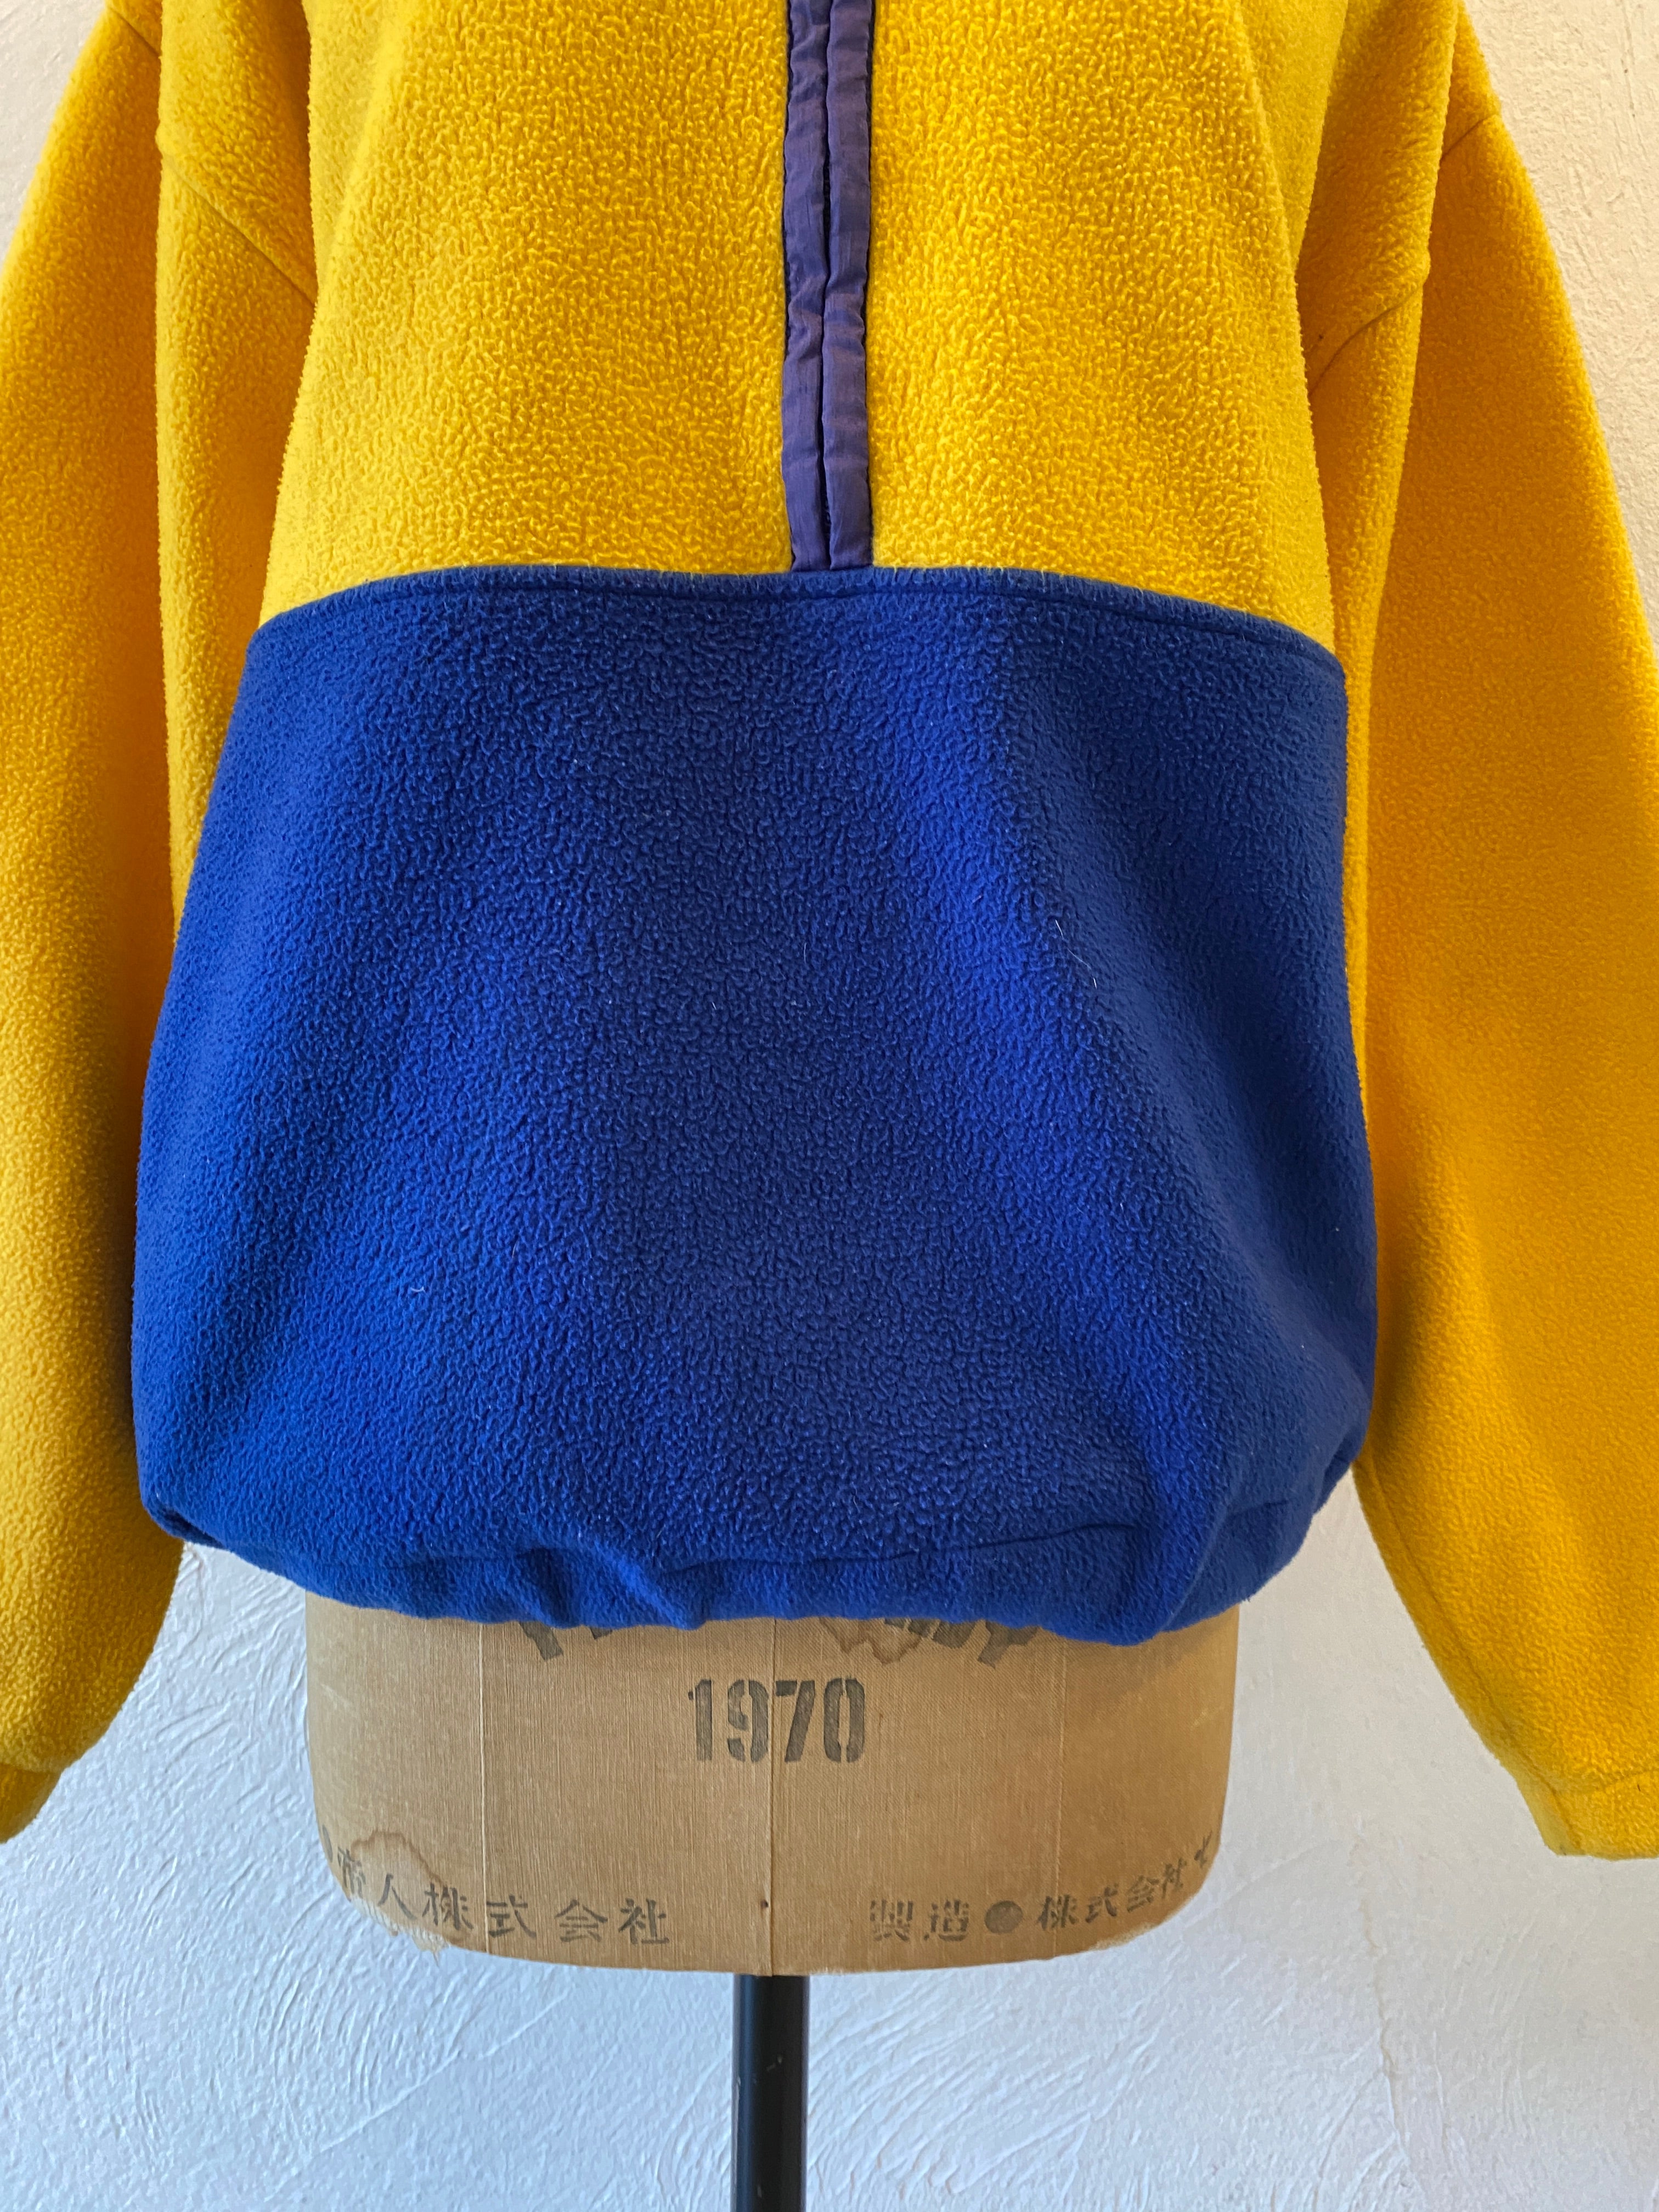 yellow fleece pullover